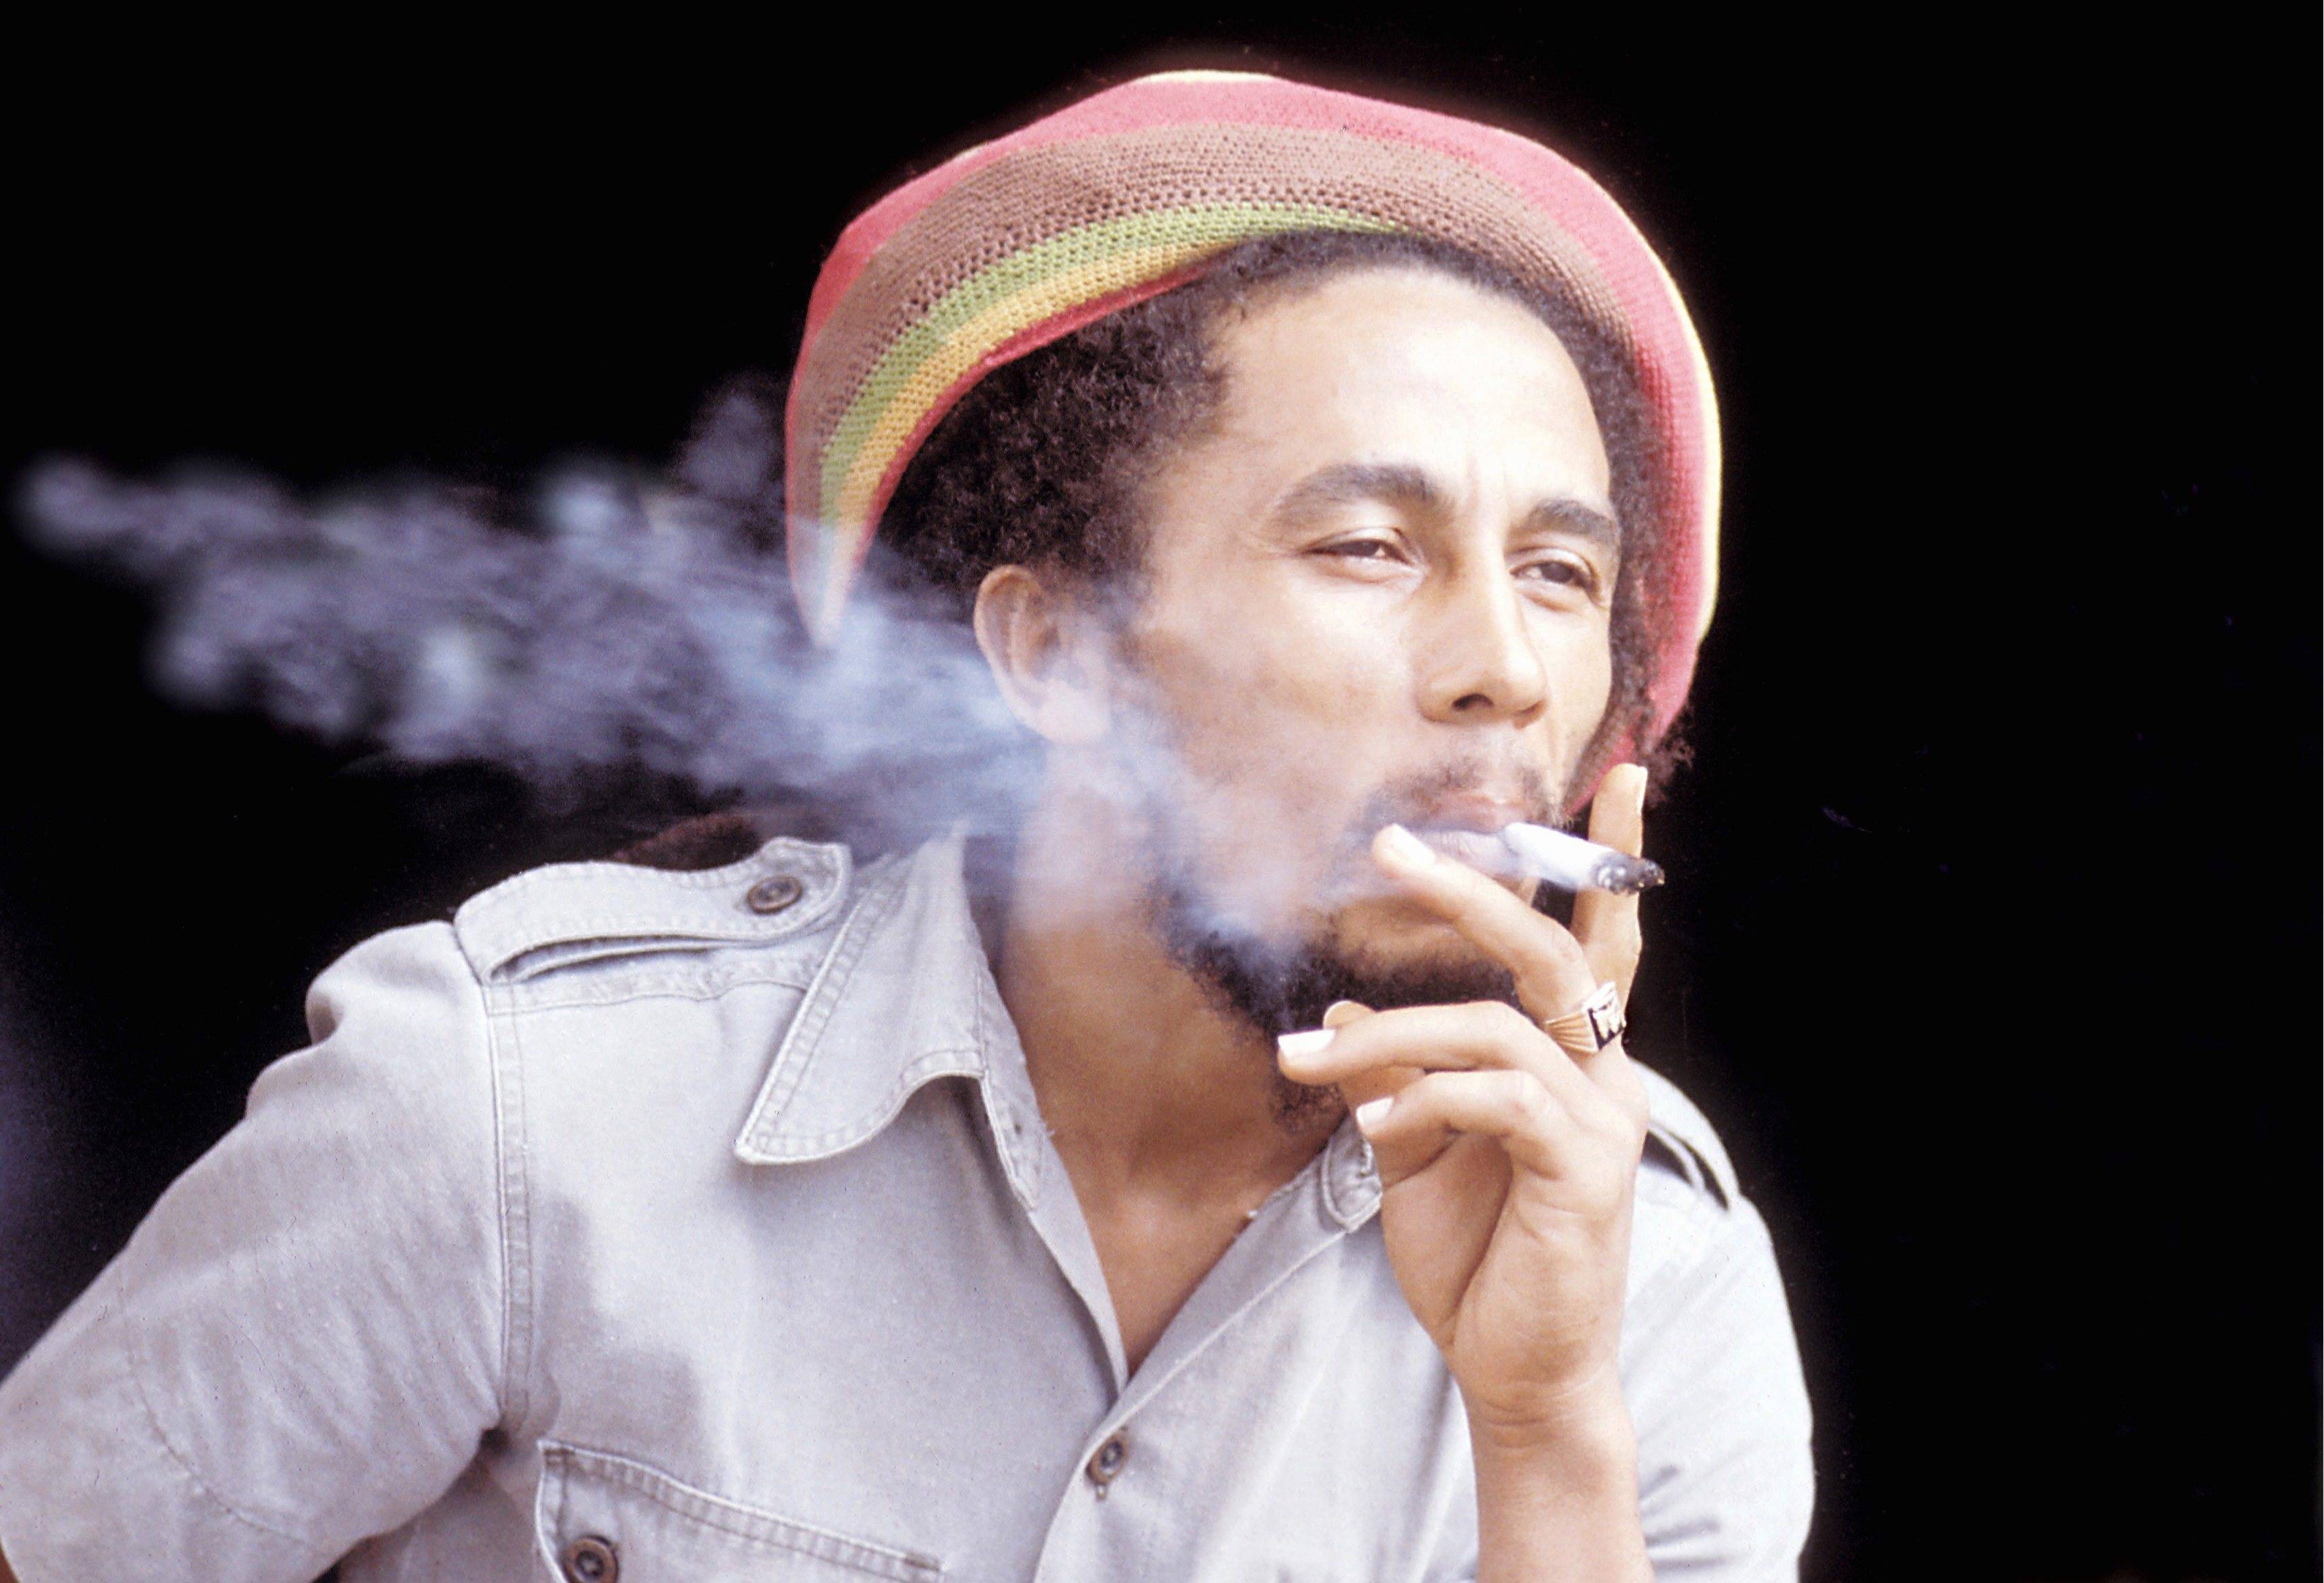 Jamajka reggae - 3 dni